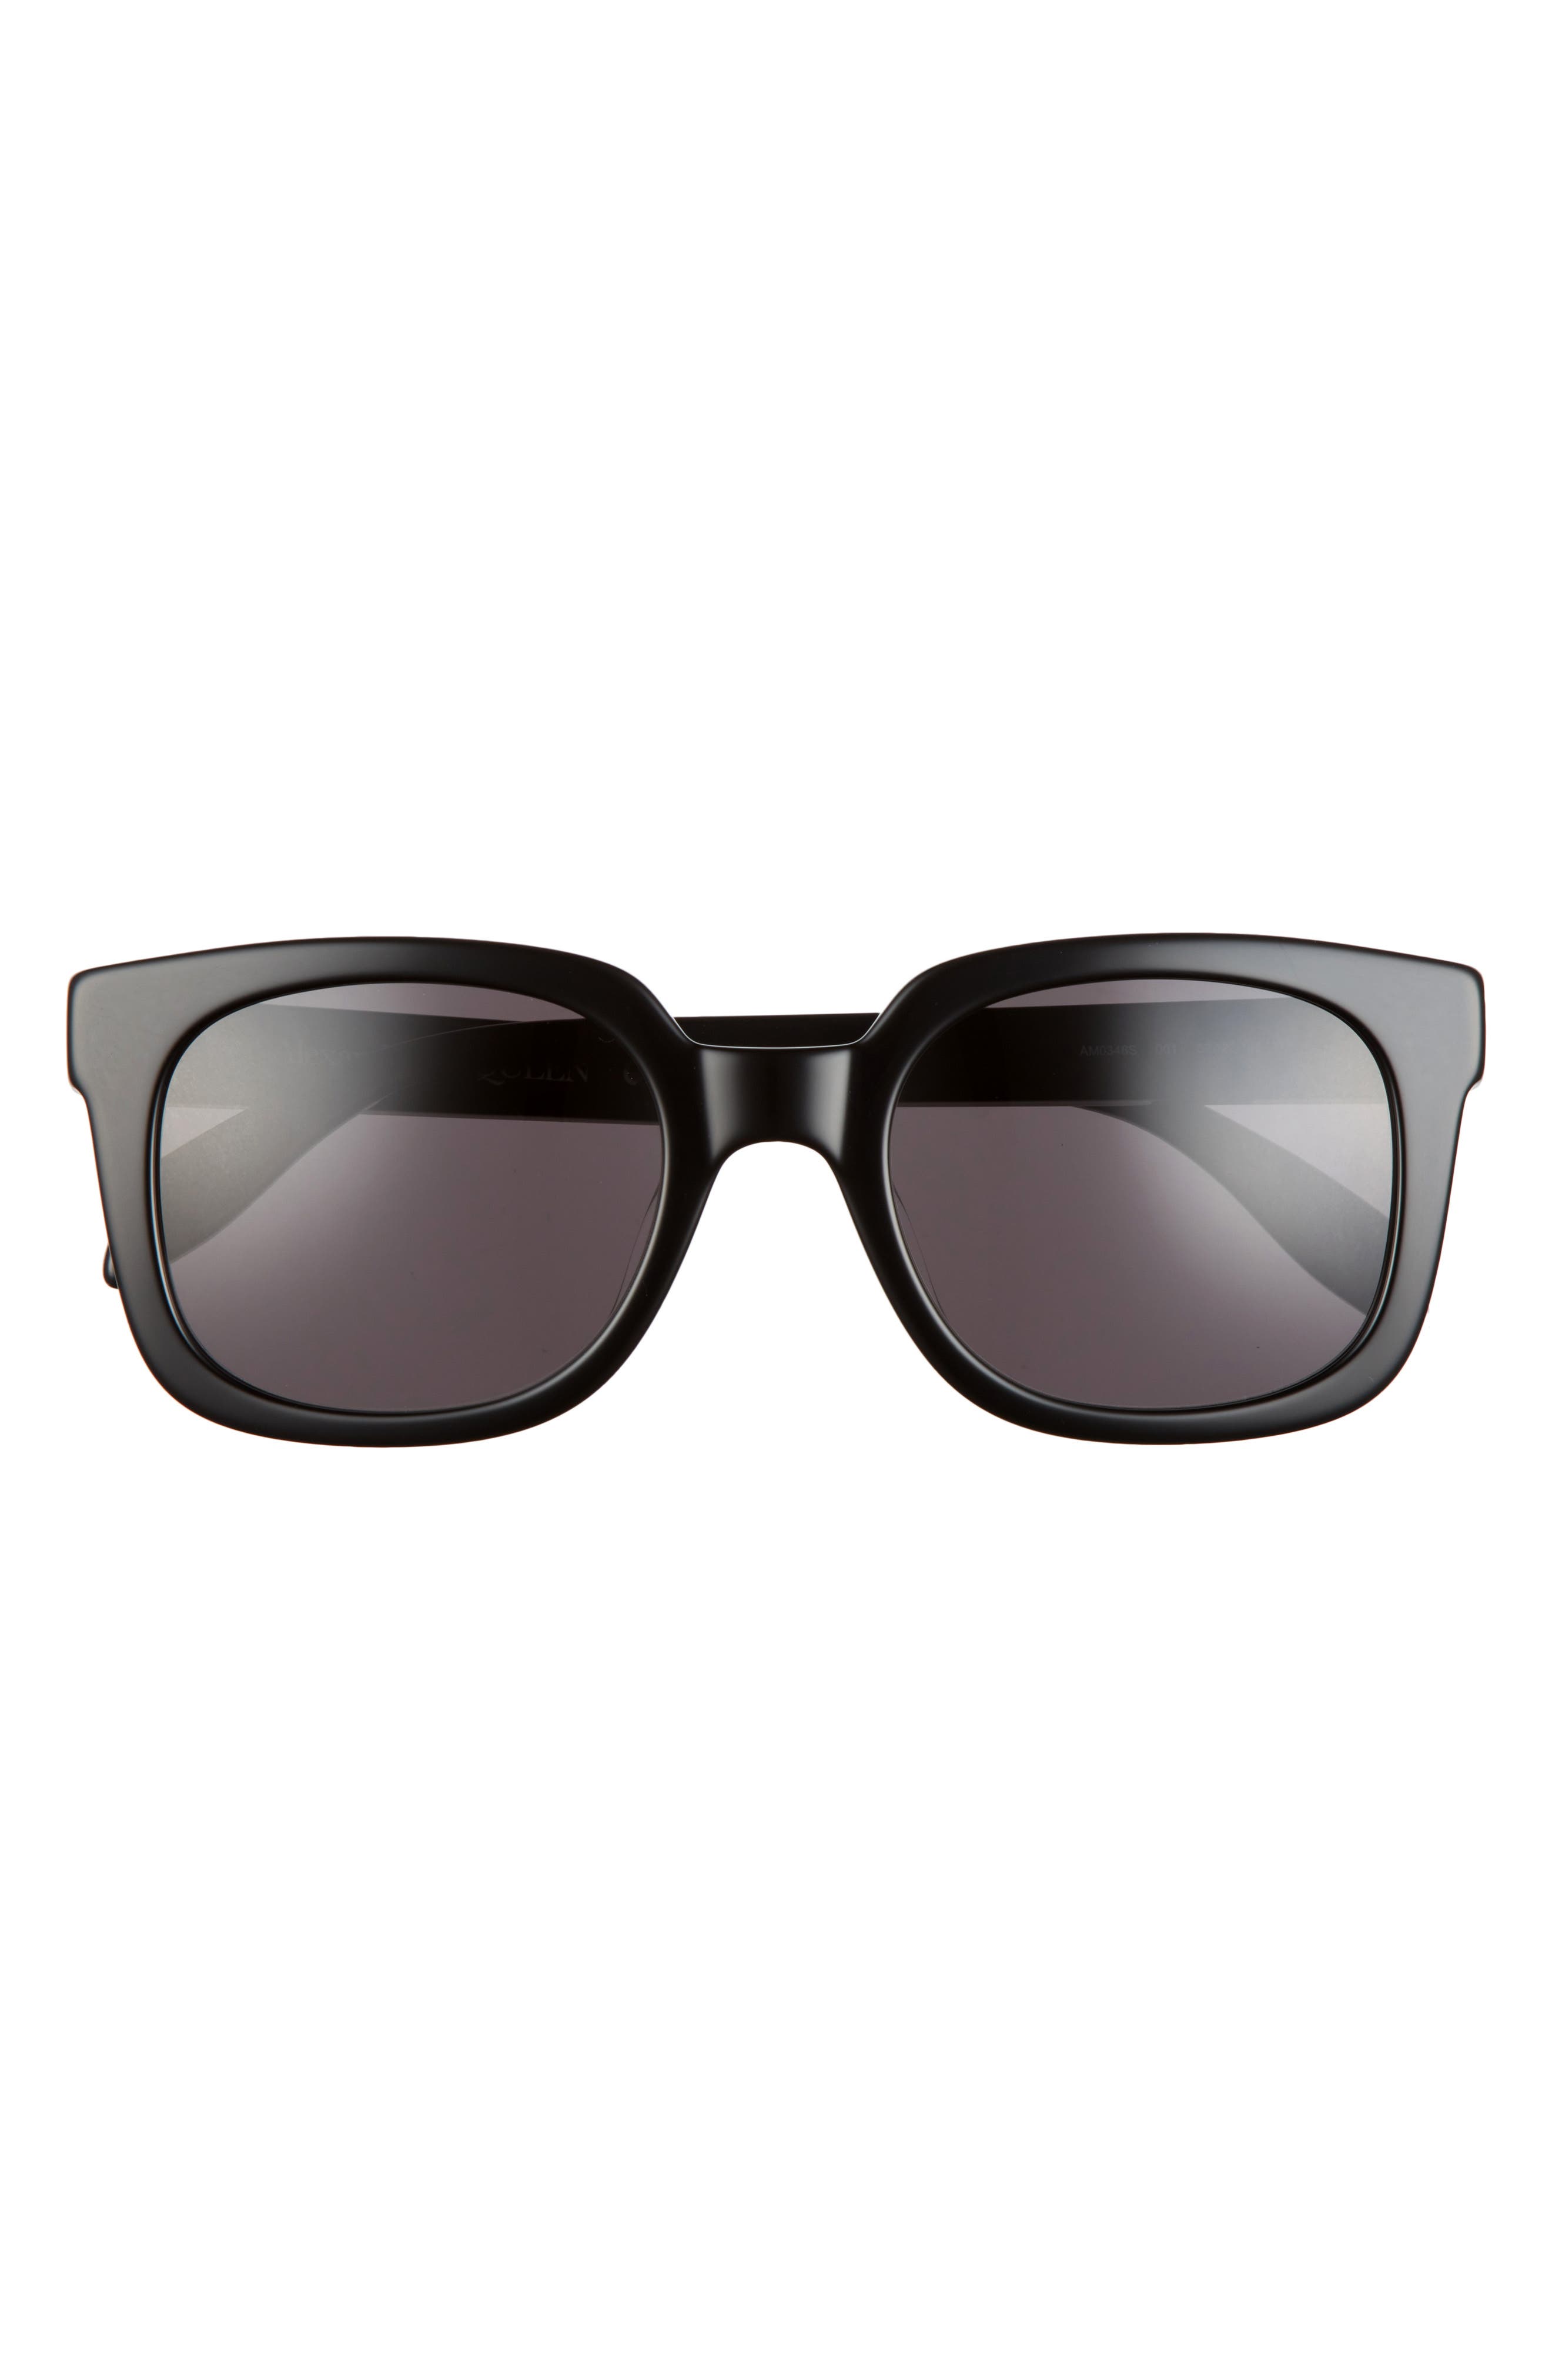 Alexander McQueen 53mm Rectangular Sunglasses in Black at Nordstrom